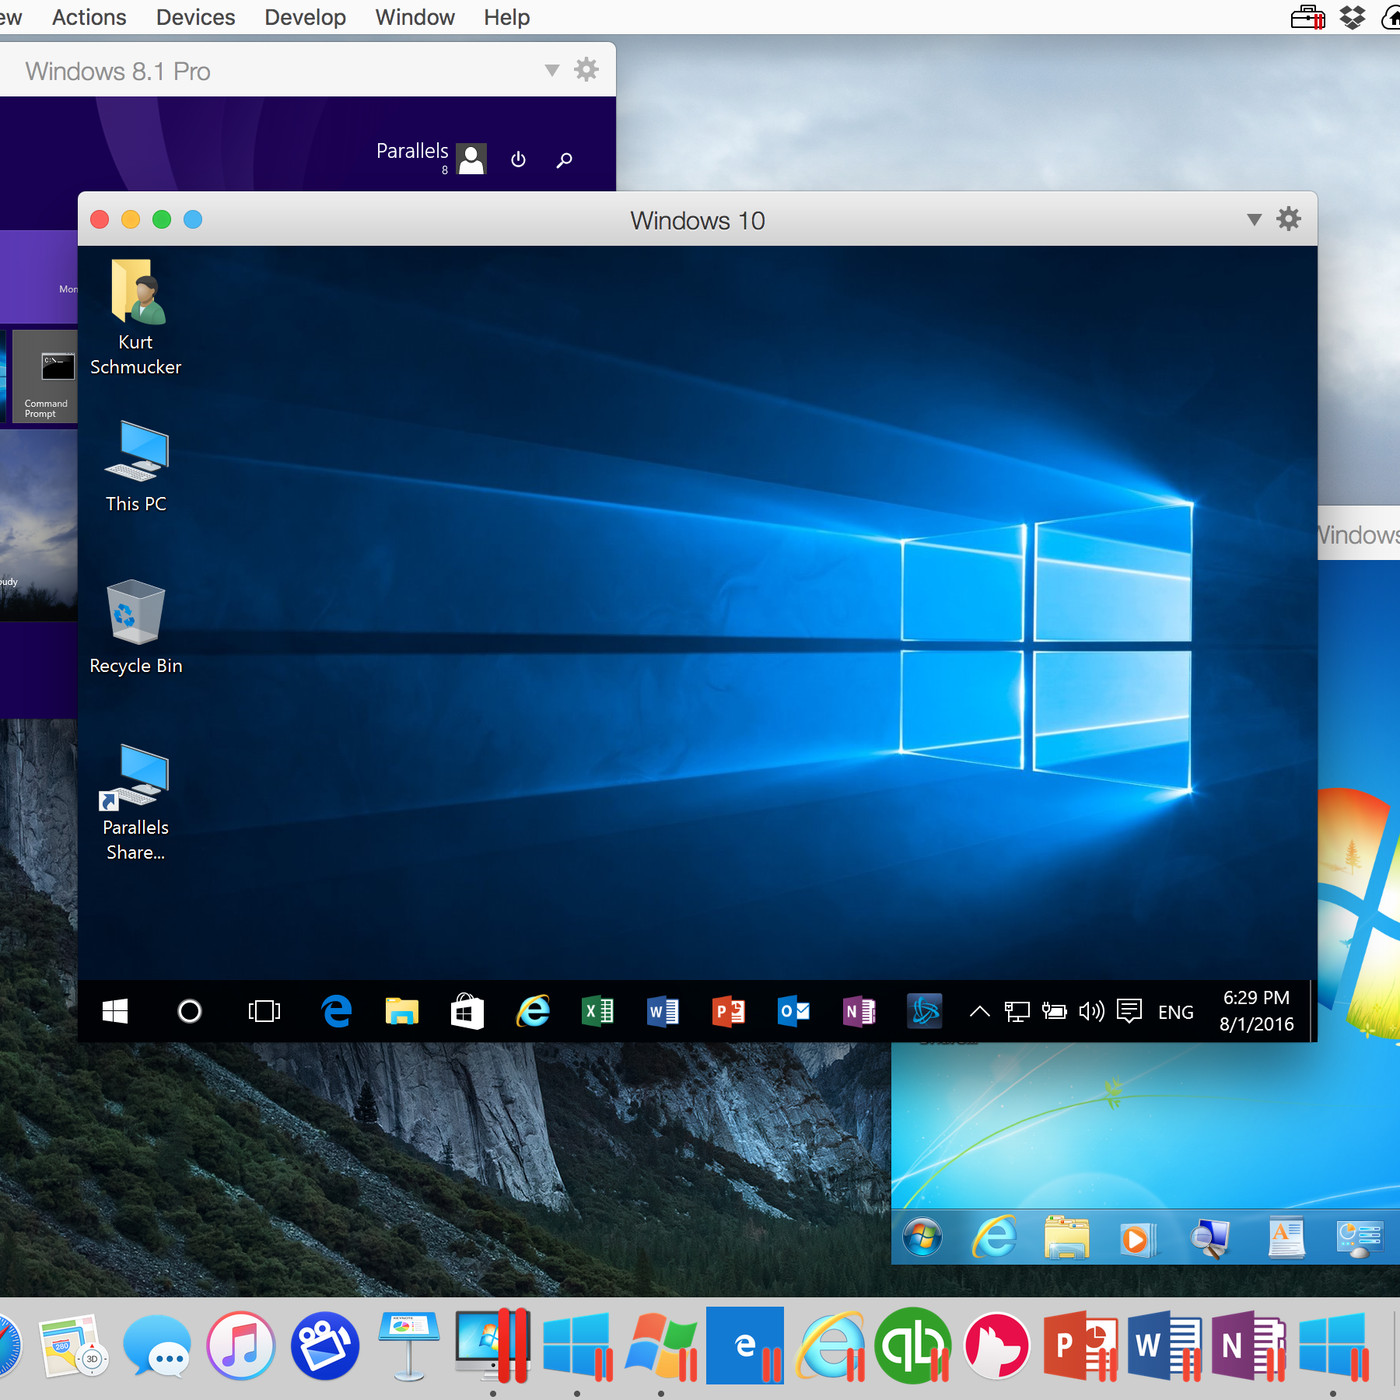 Mac Os And Windows